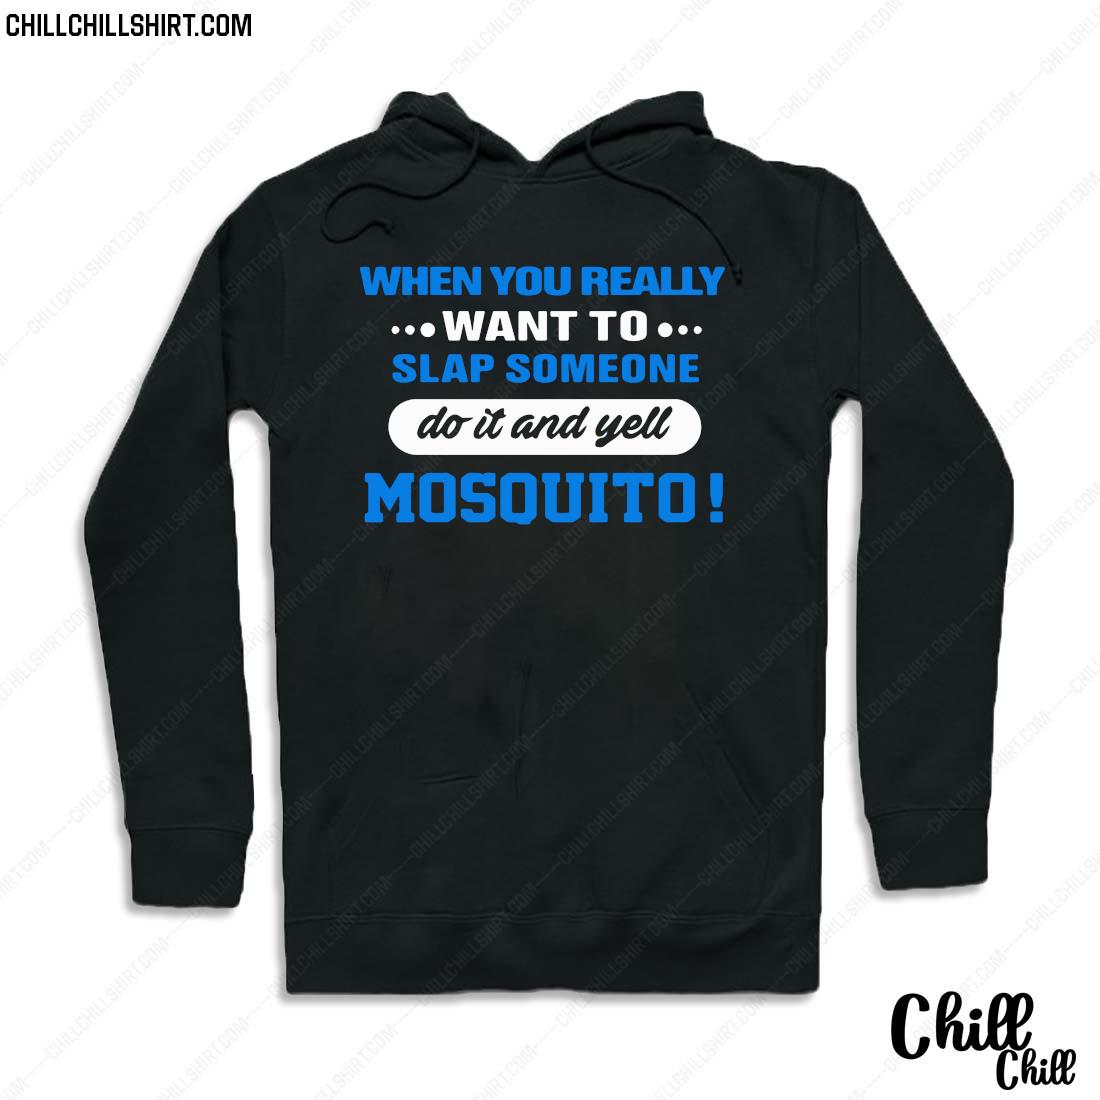 mosquito shirt long sleeve